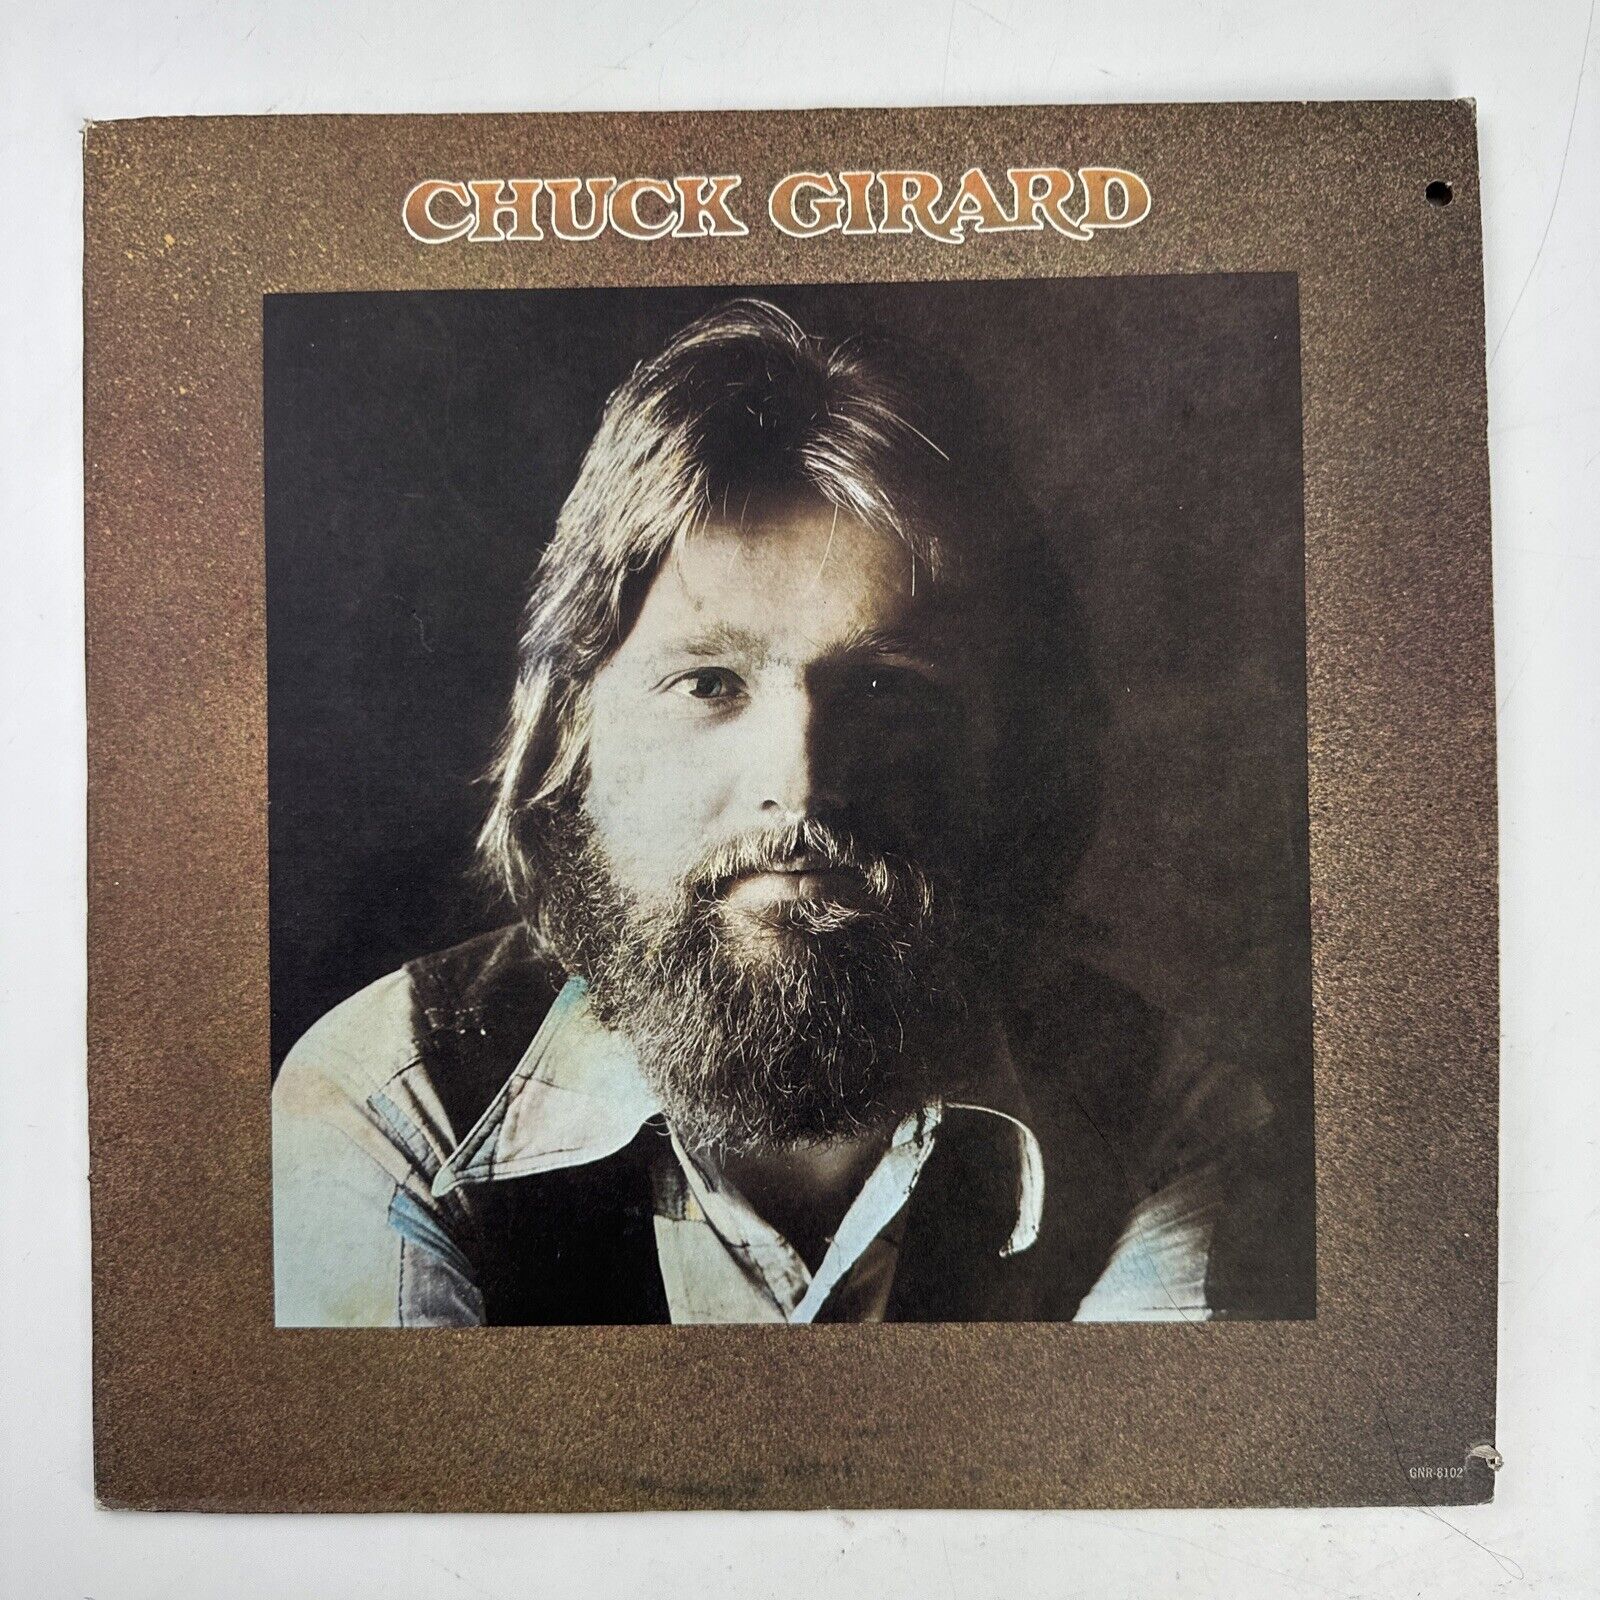 Chuck Girard Self Titled LP Record Album Vinyl